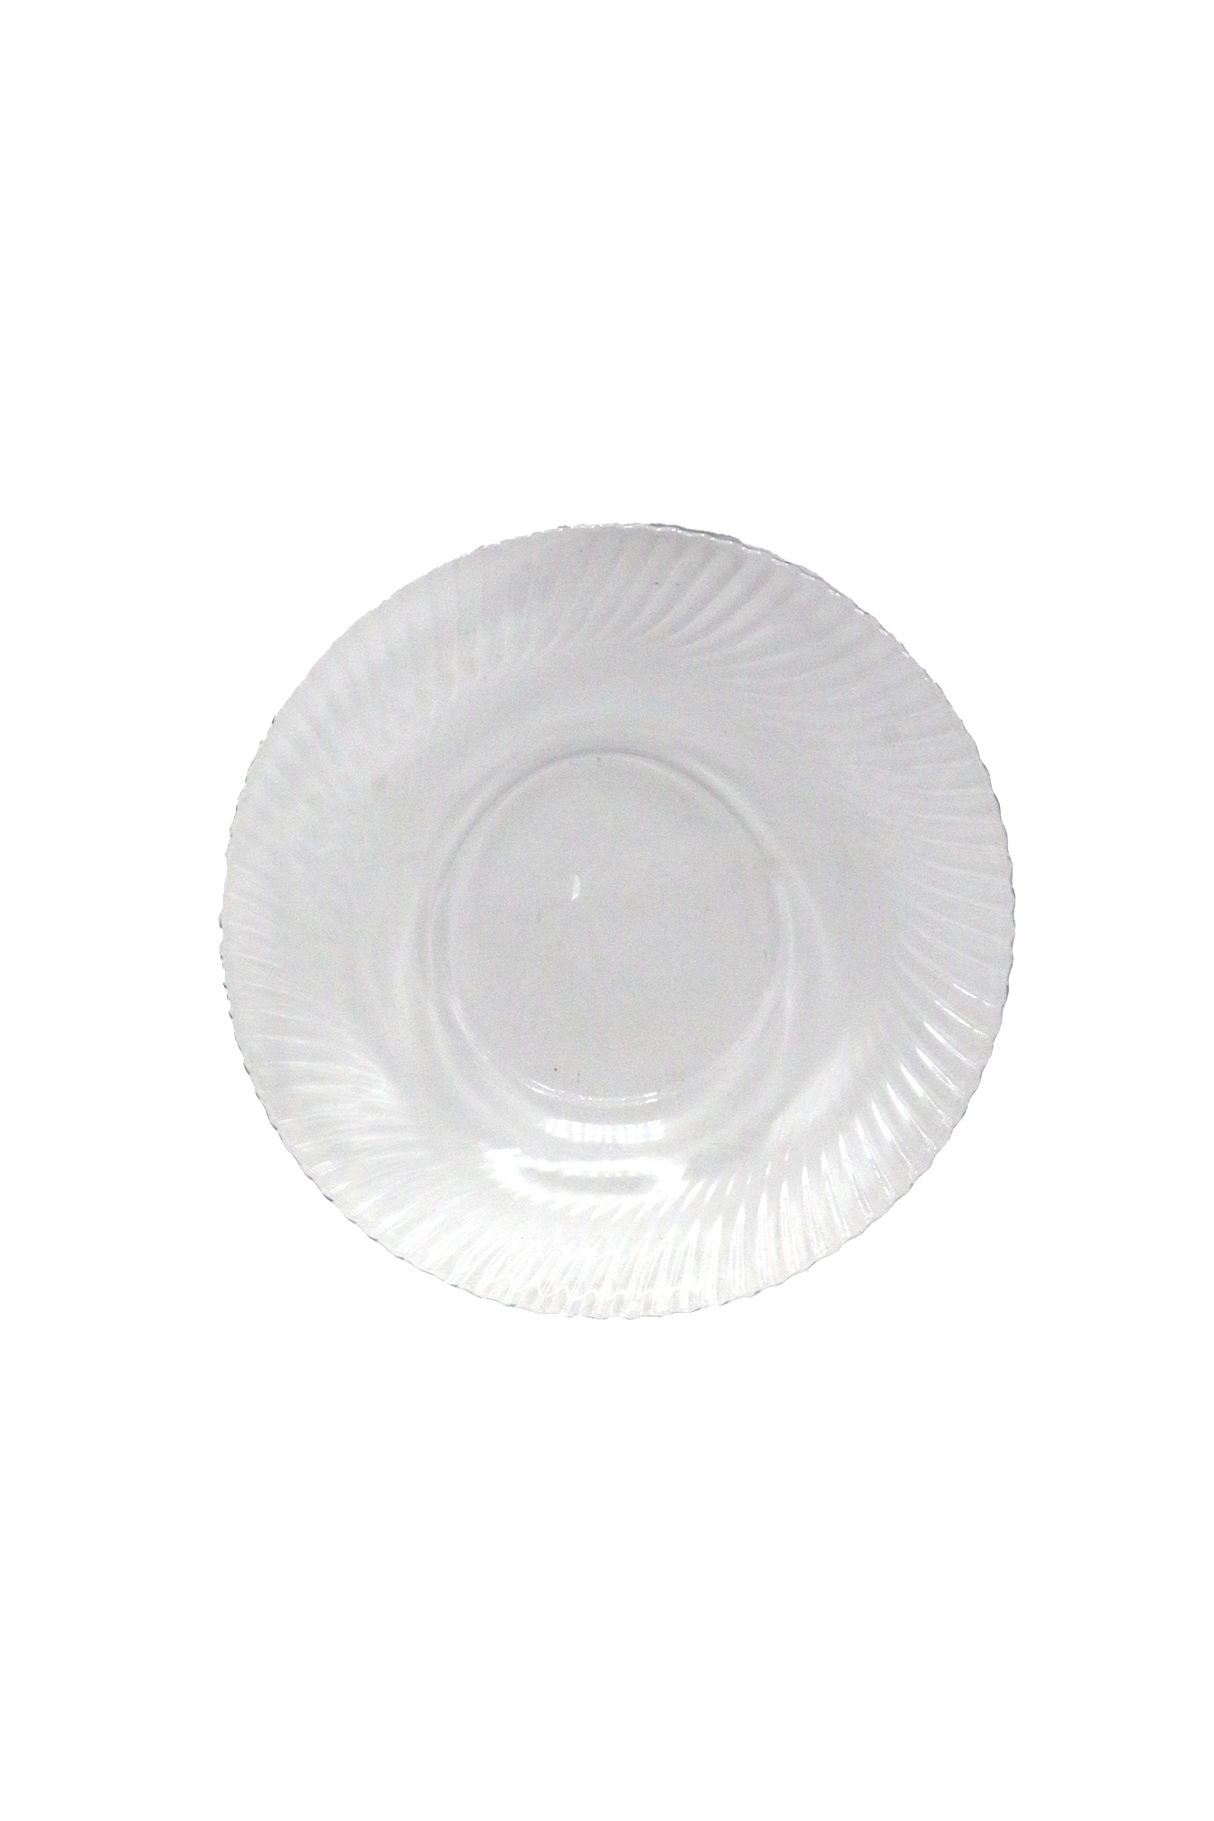 diamond soup plate 401012